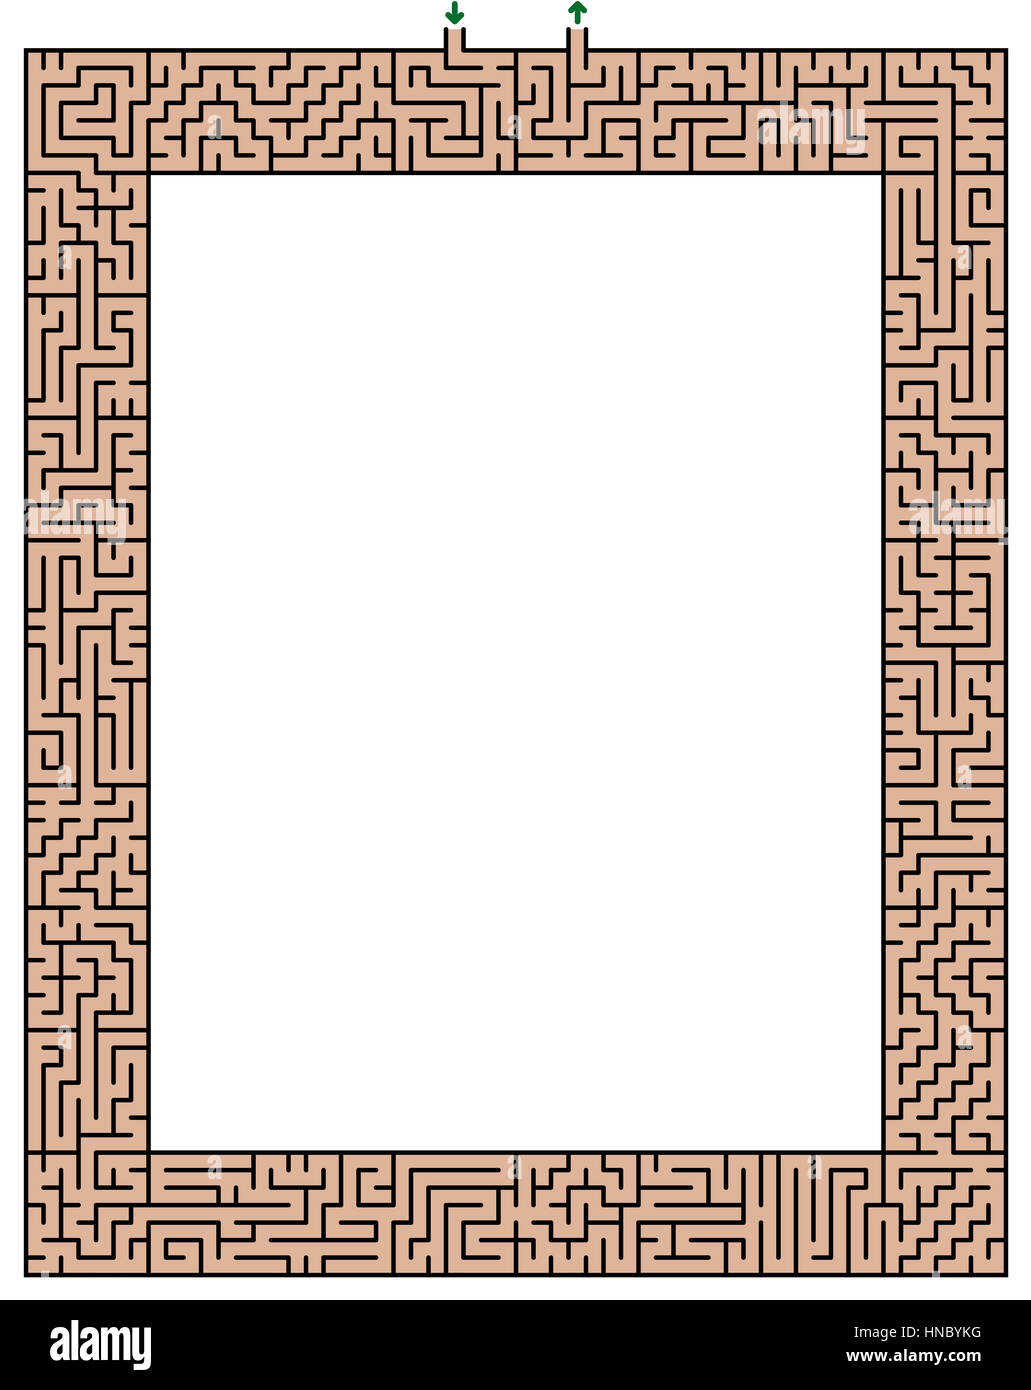 Maze Frame High Size Blank Stock Photo